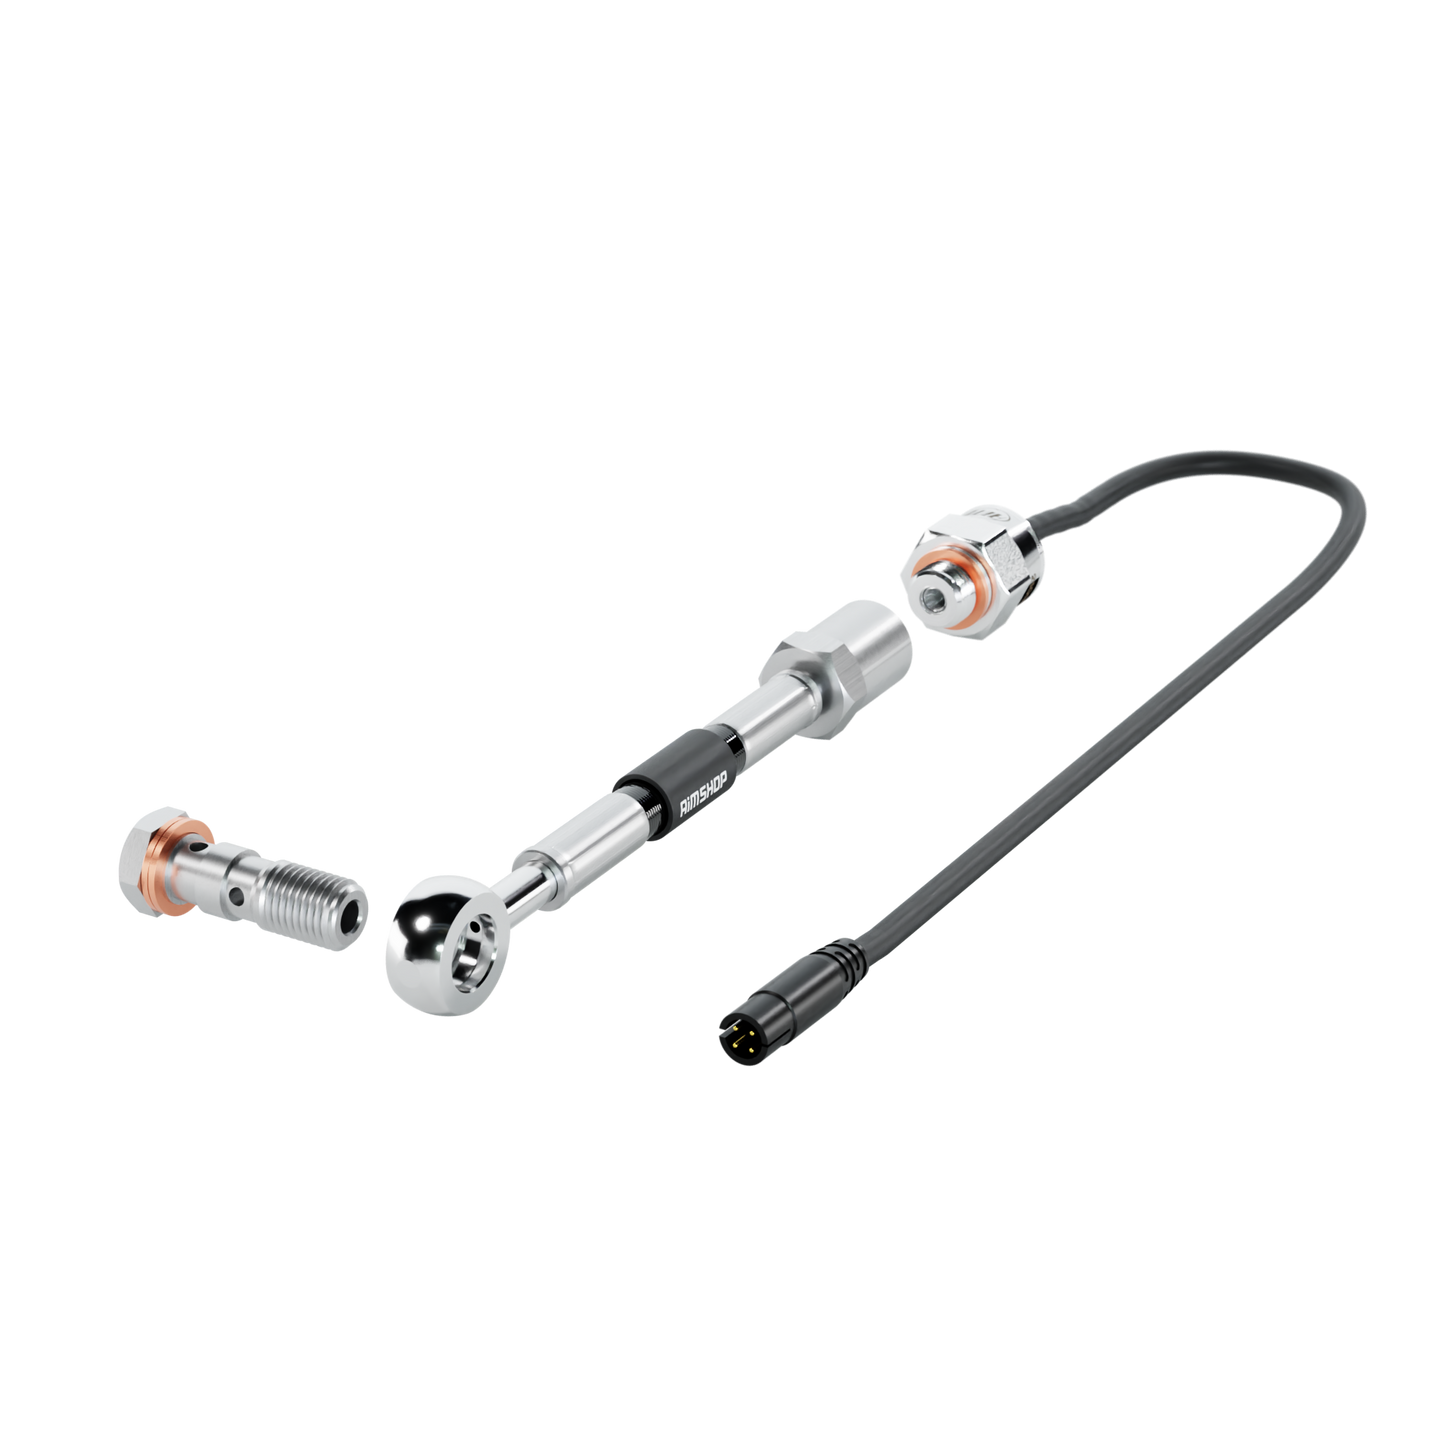 Brake Pressure Sensor Adapter With Double Banjo Bolt M10 - AimShop.com